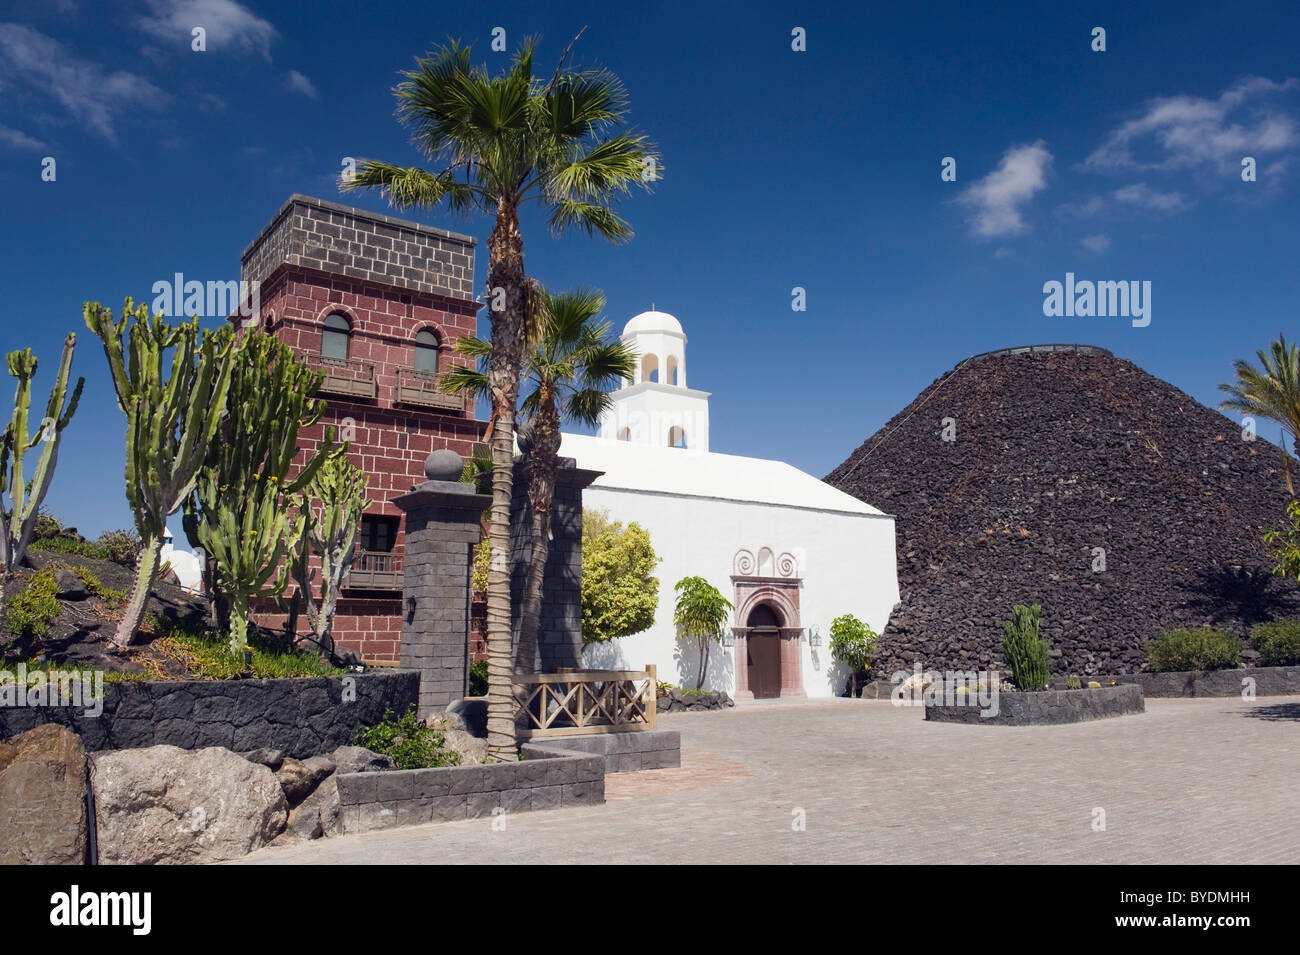 Hotel, Gran Melia Volcan, Marina Rubicon, Playa Blanca, Lanzarote, Canary Islands, Spain, Europe Stock Photo